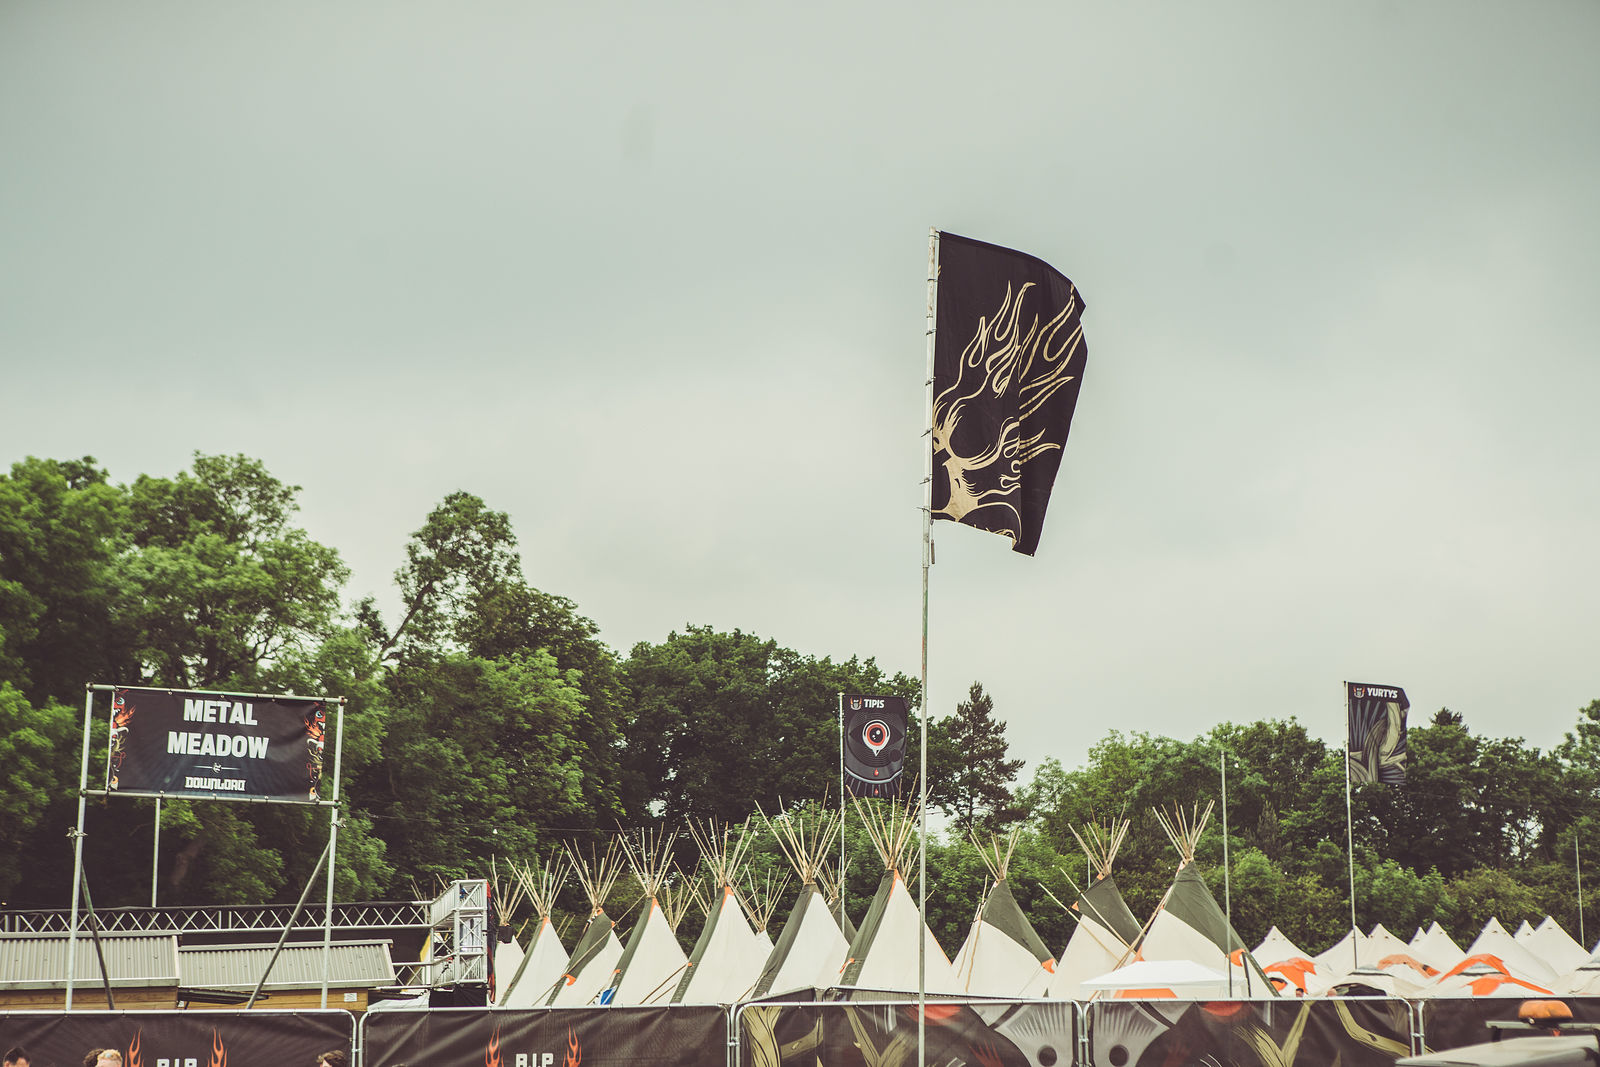 Download Festival 2016